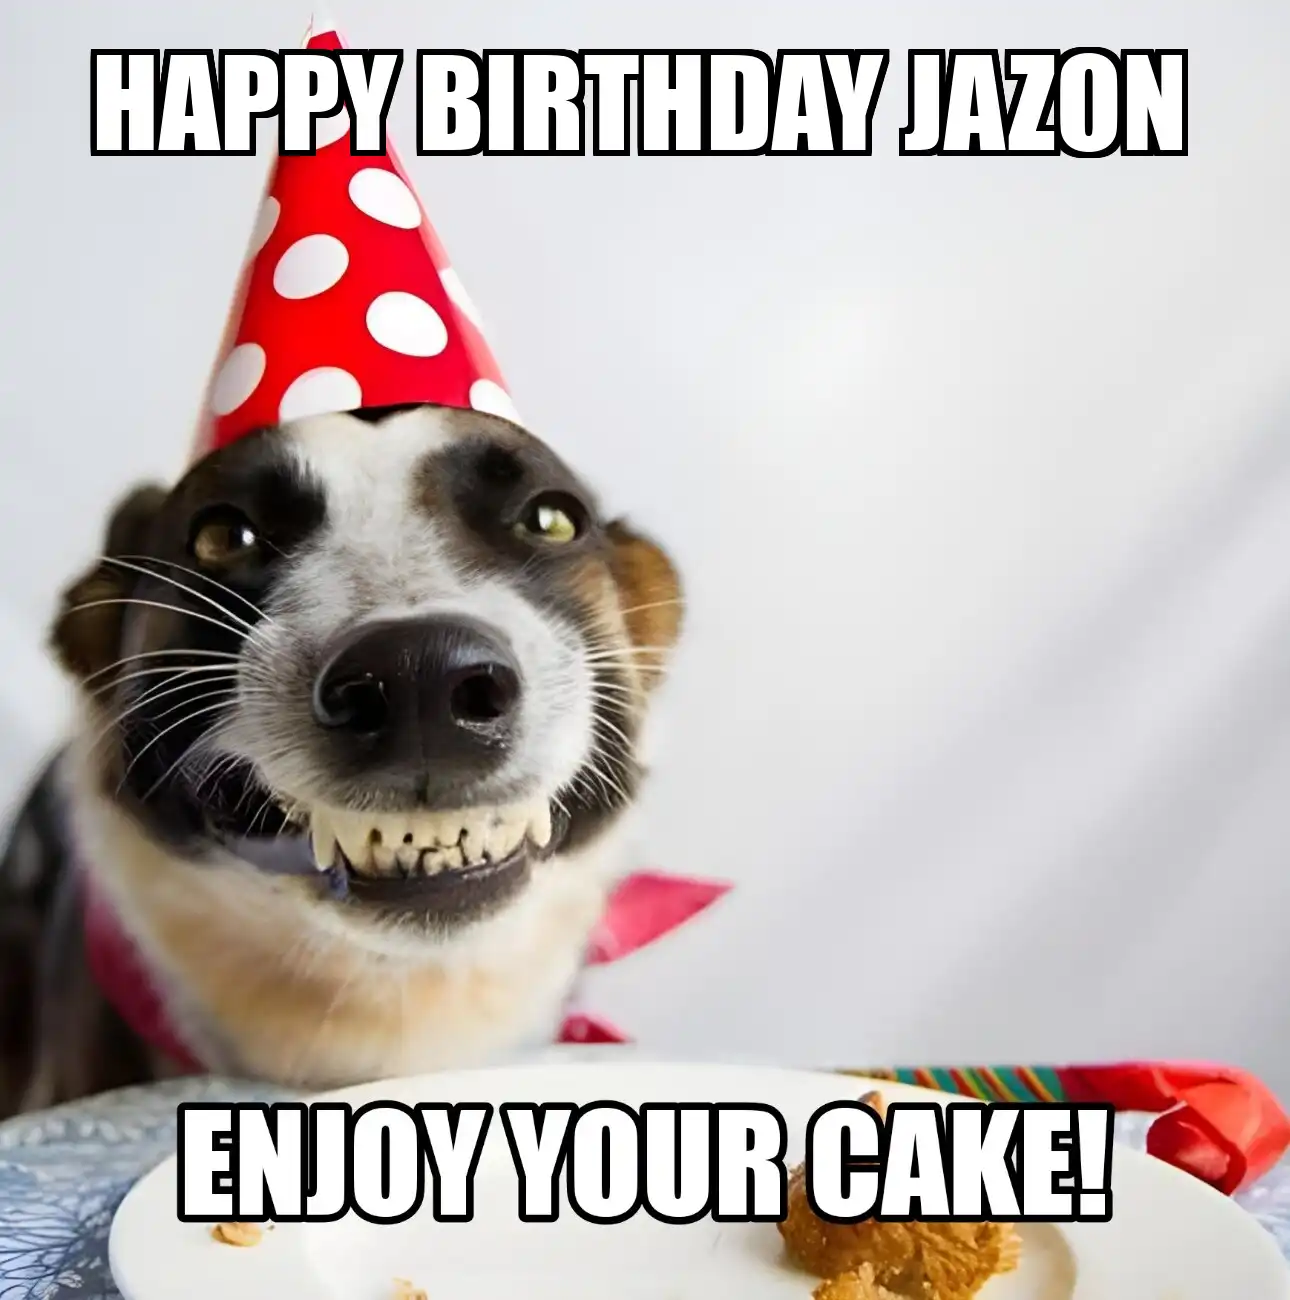 Happy Birthday Jazon Enjoy Your Cake Dog Meme